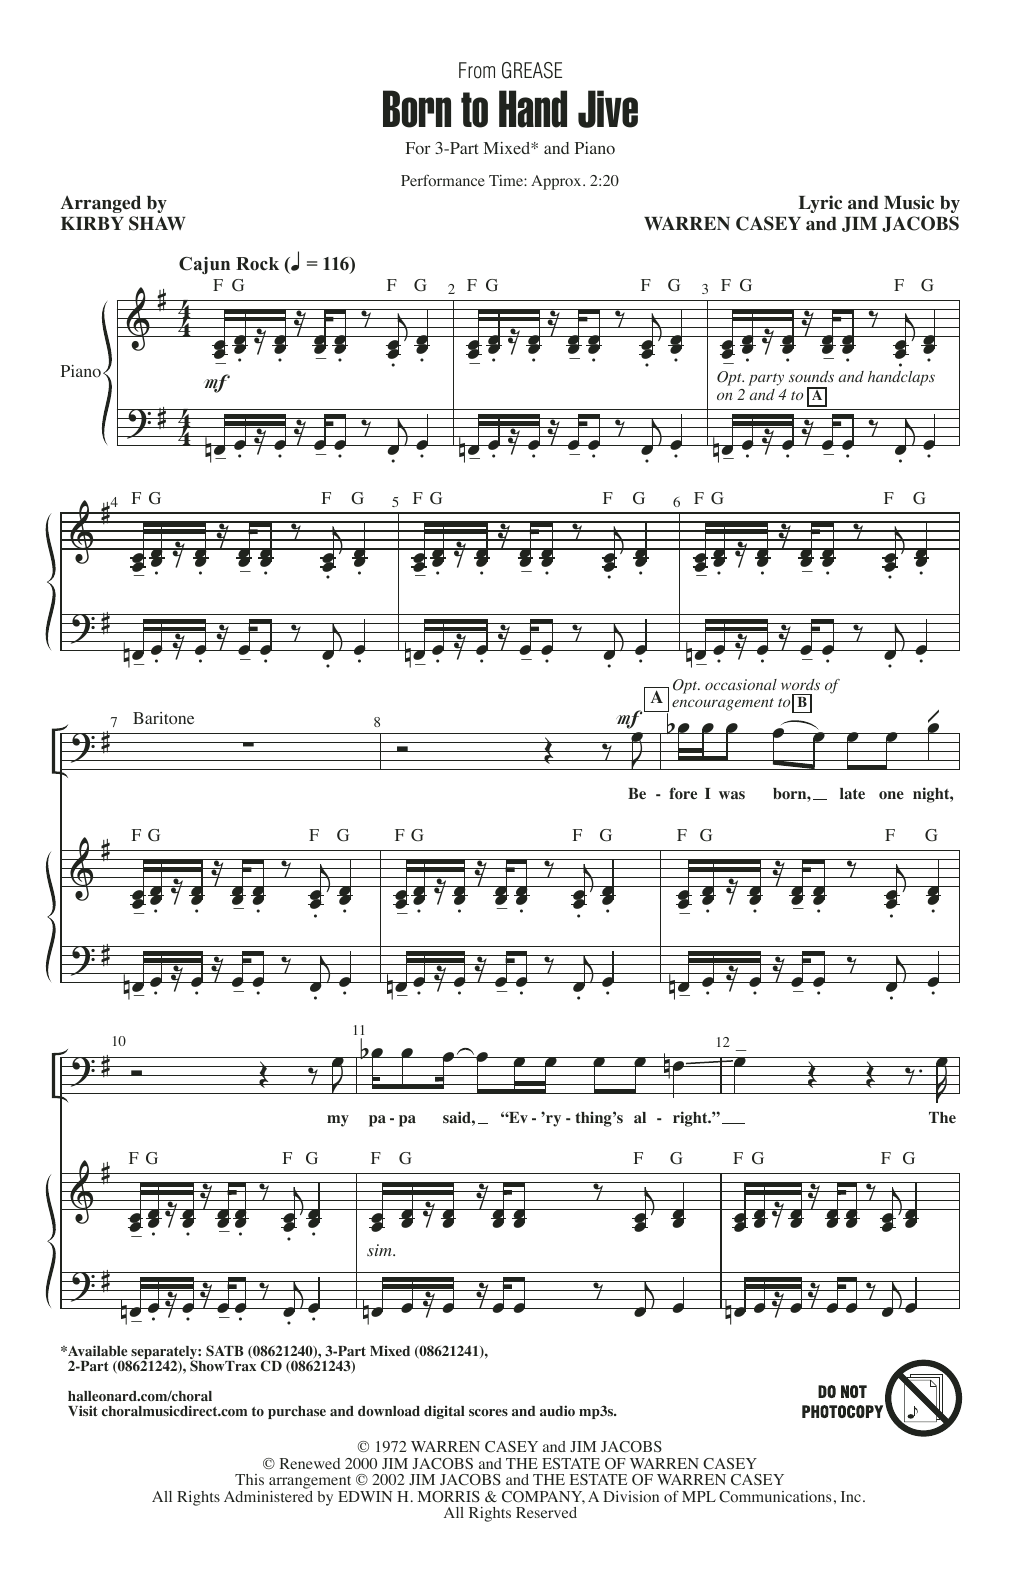 Sha Na Na Born To Hand Jive (from Grease) (arr. Kirby Shaw) Sheet Music Notes & Chords for 3-Part Mixed Choir - Download or Print PDF